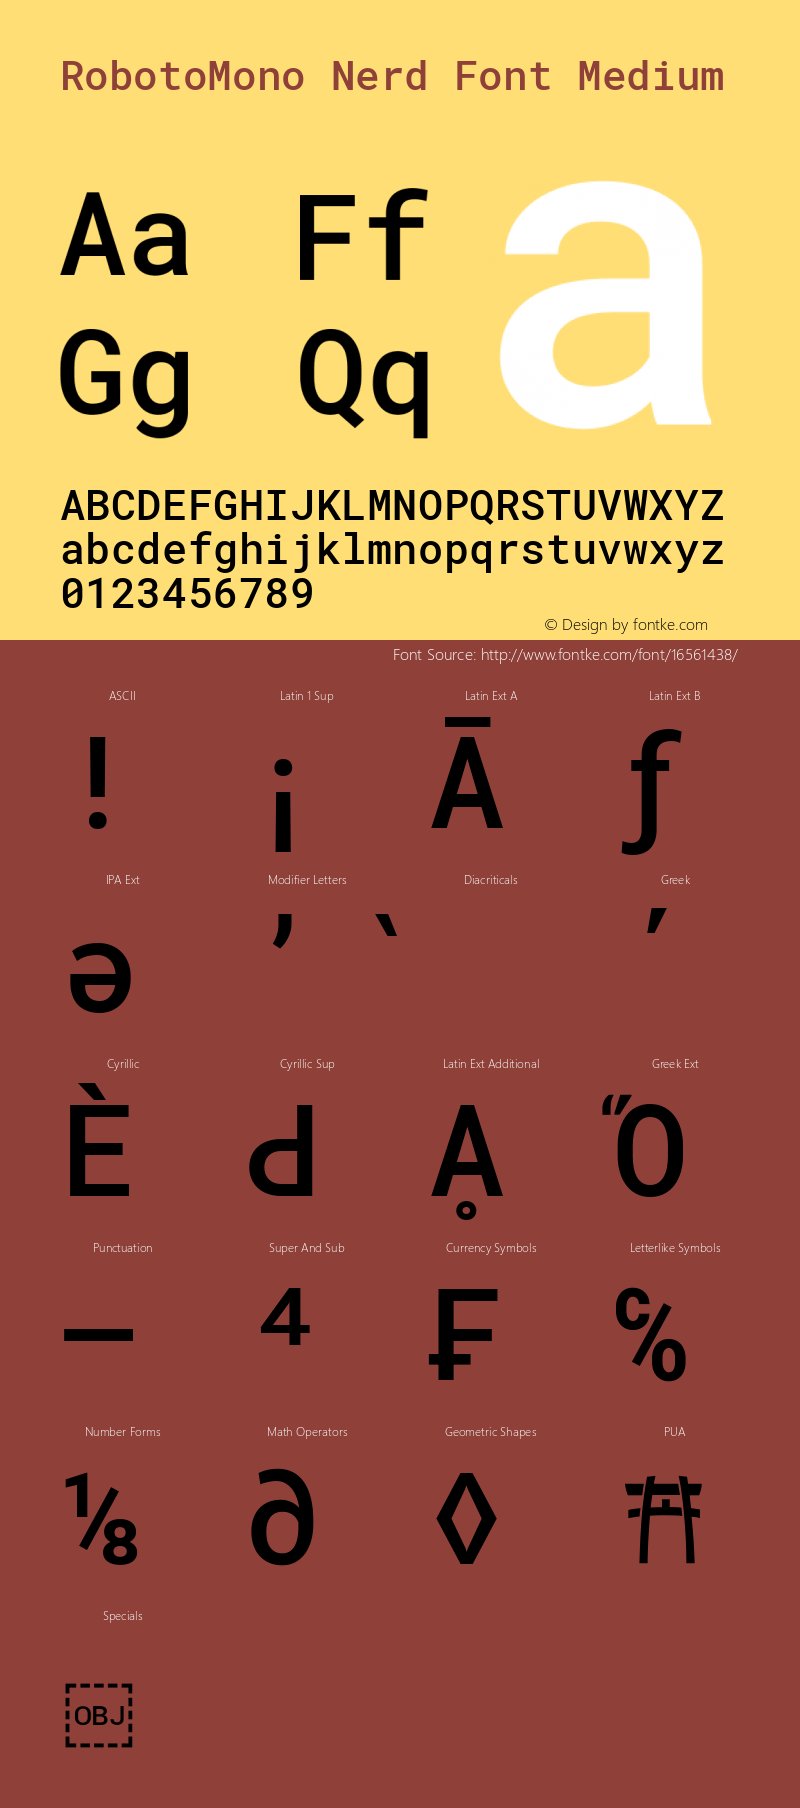 RobotoMono Nerd Font Medium Version 2.000986; 2015; ttfautohint (v1.3)图片样张